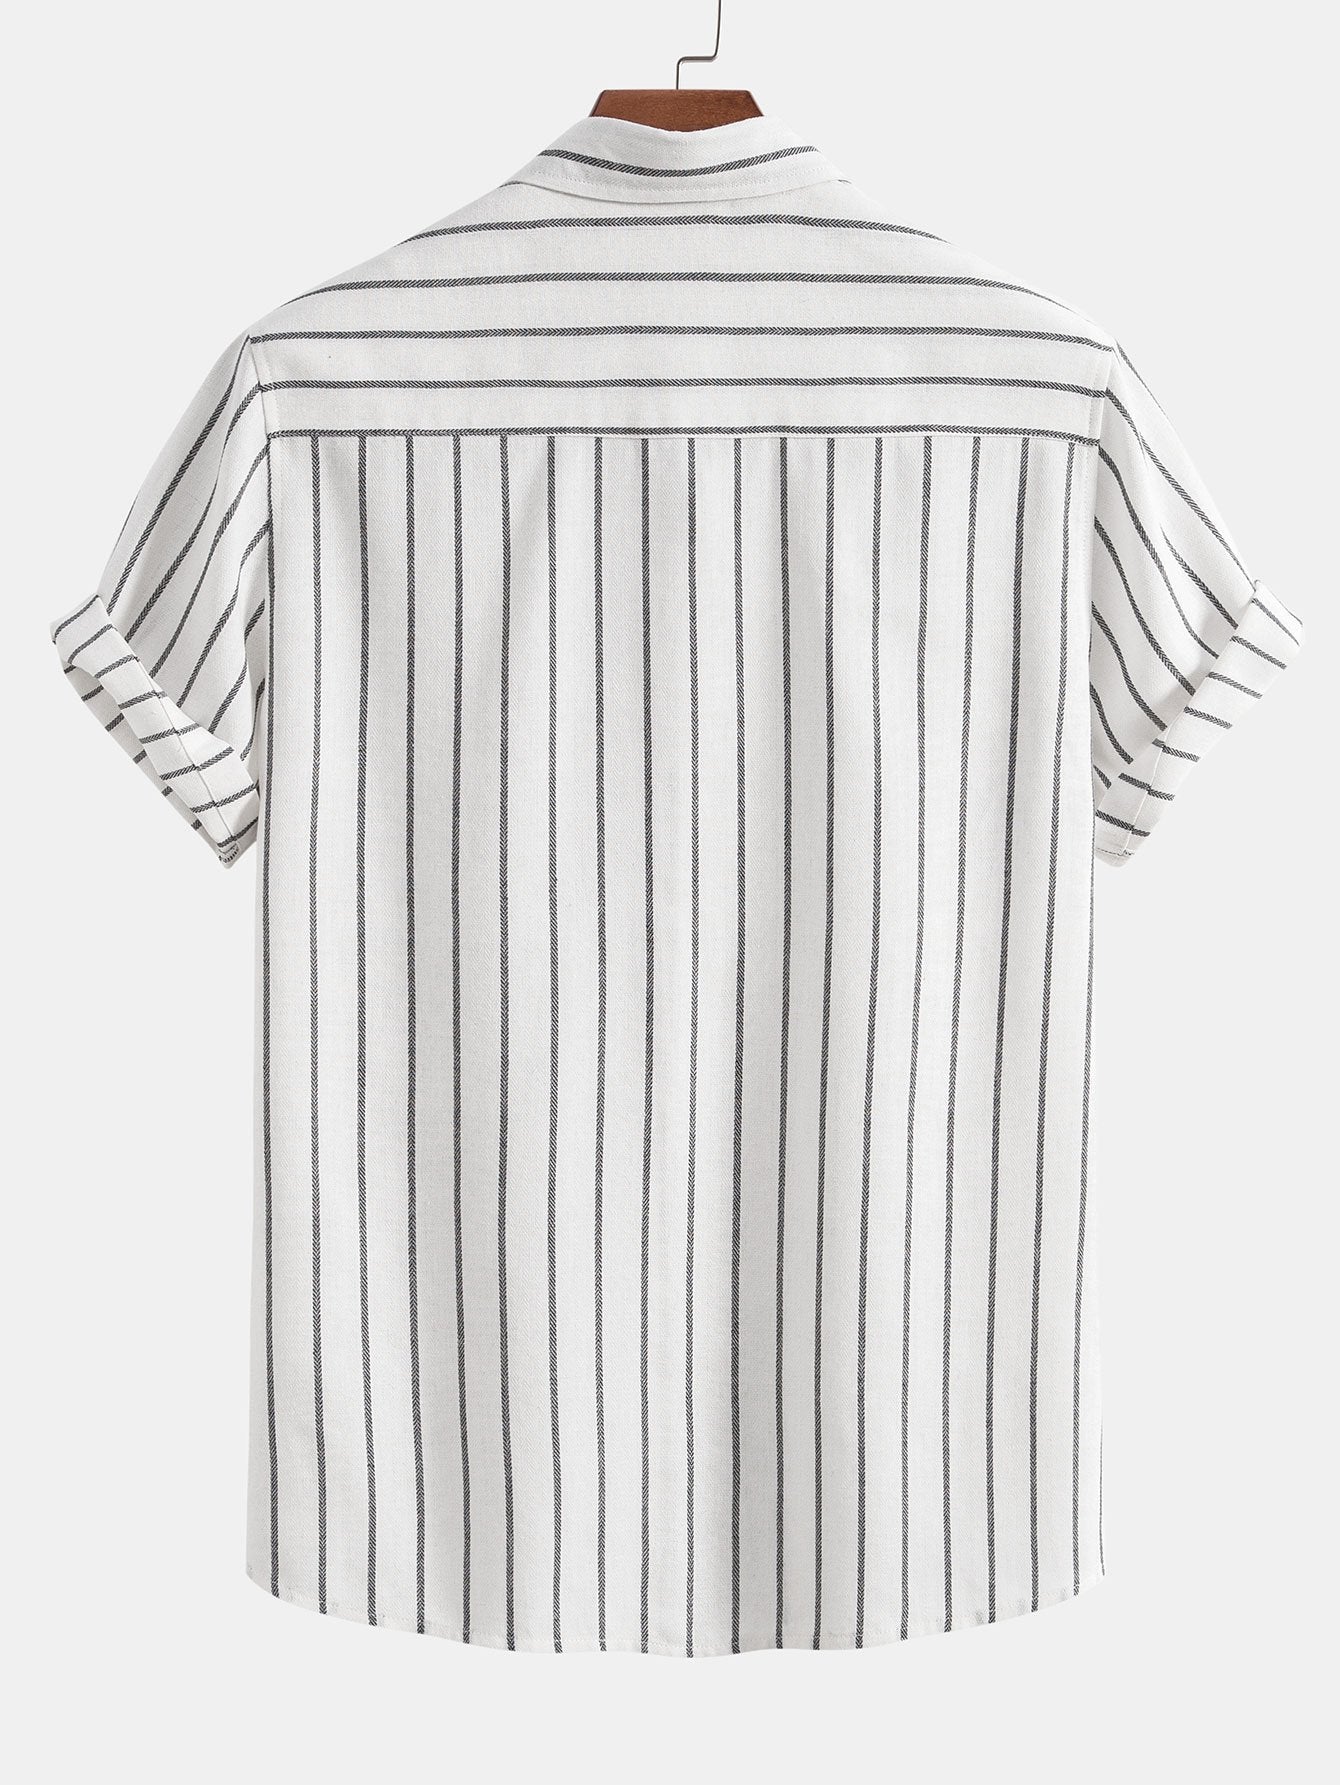 Cotton Blend Striped Button Up Shirt &amp; Straight Leg Linen Pants